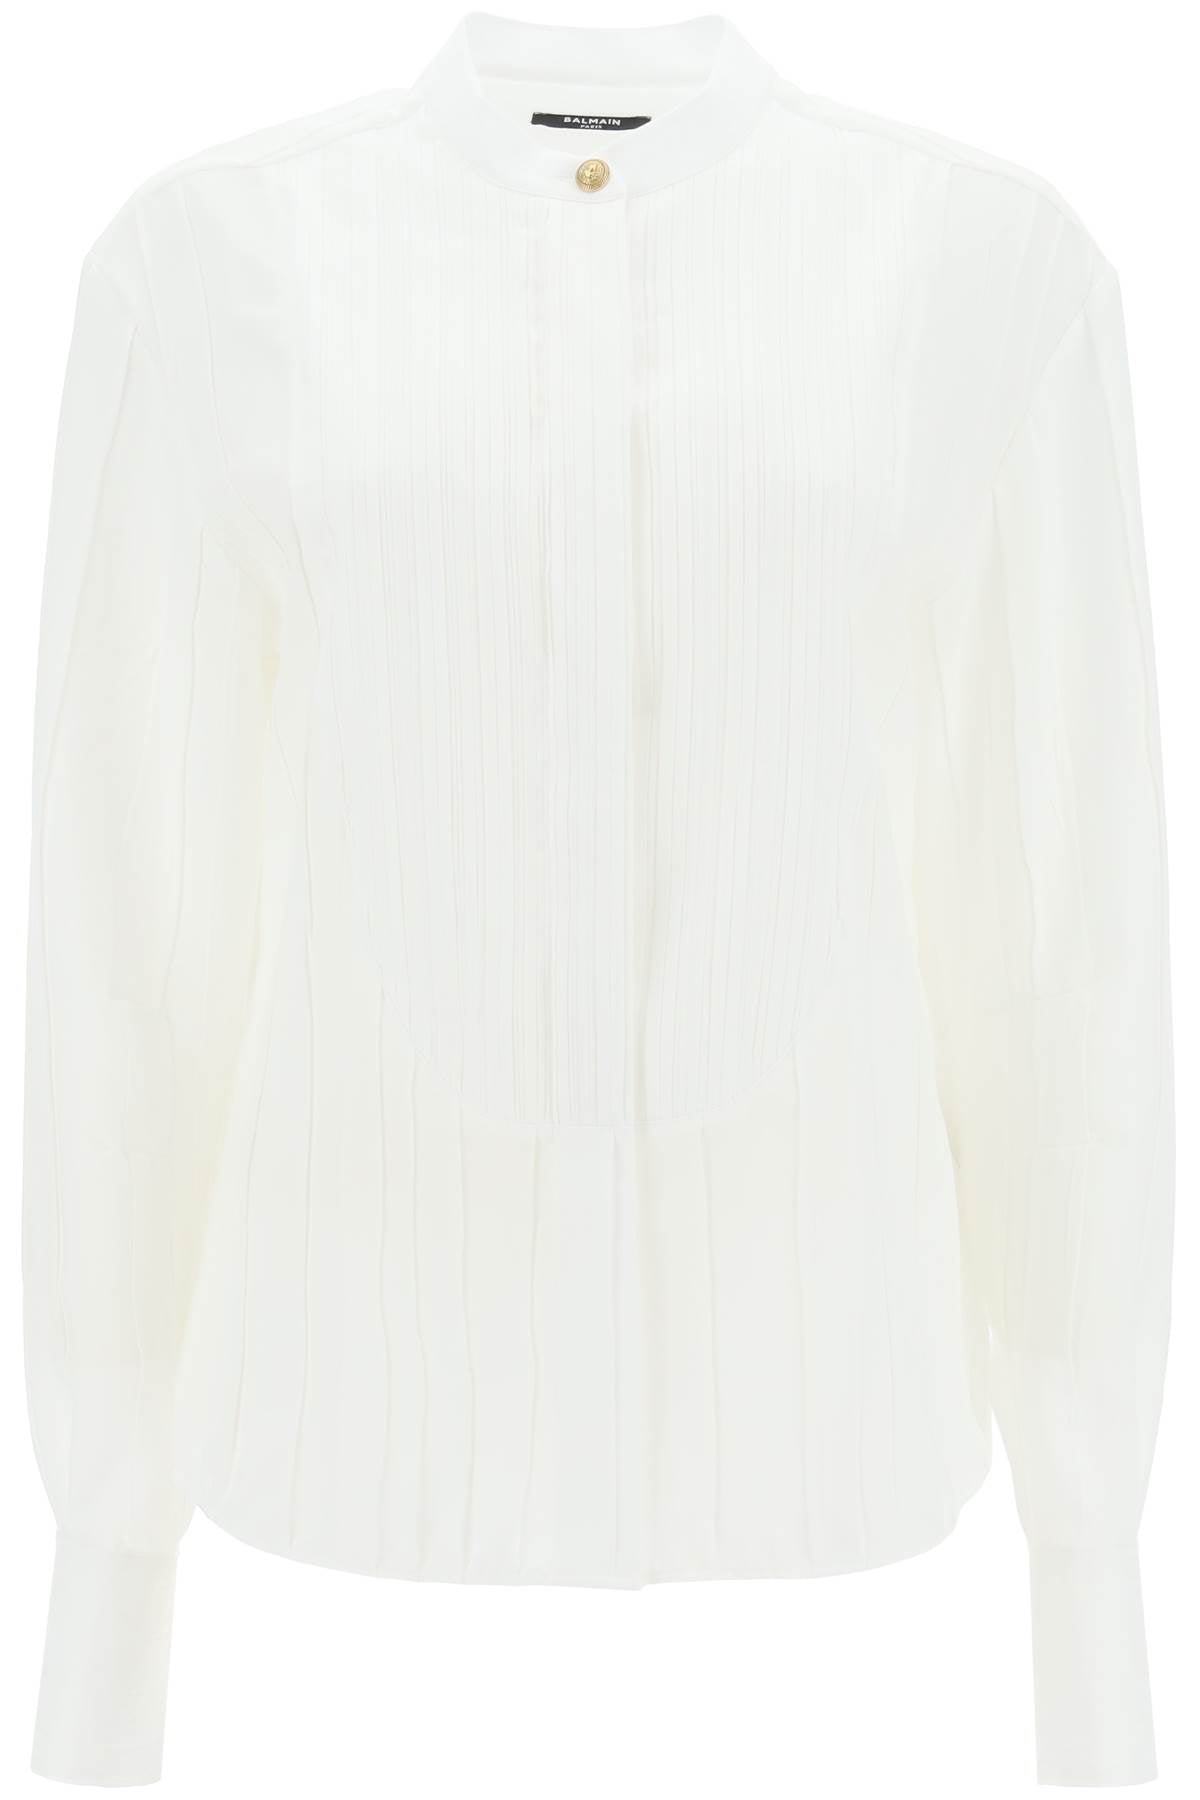 Shop Balmain Elegant White Pleated Bib Shirt For Women